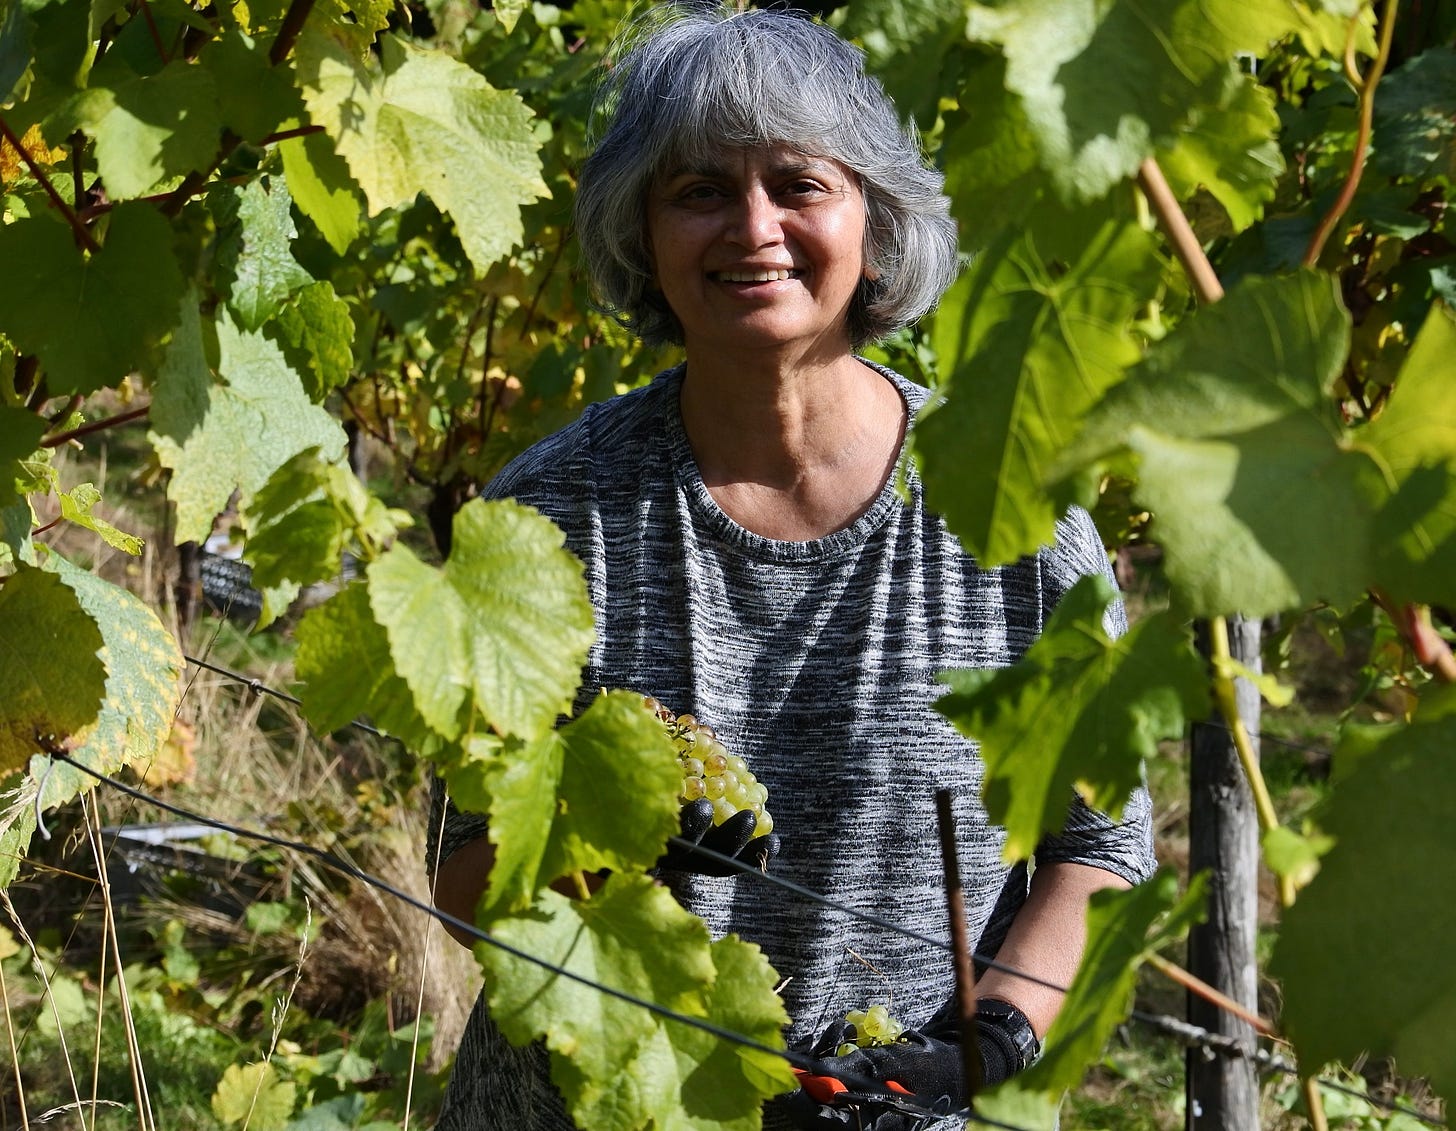 A volunteer amongst the vines